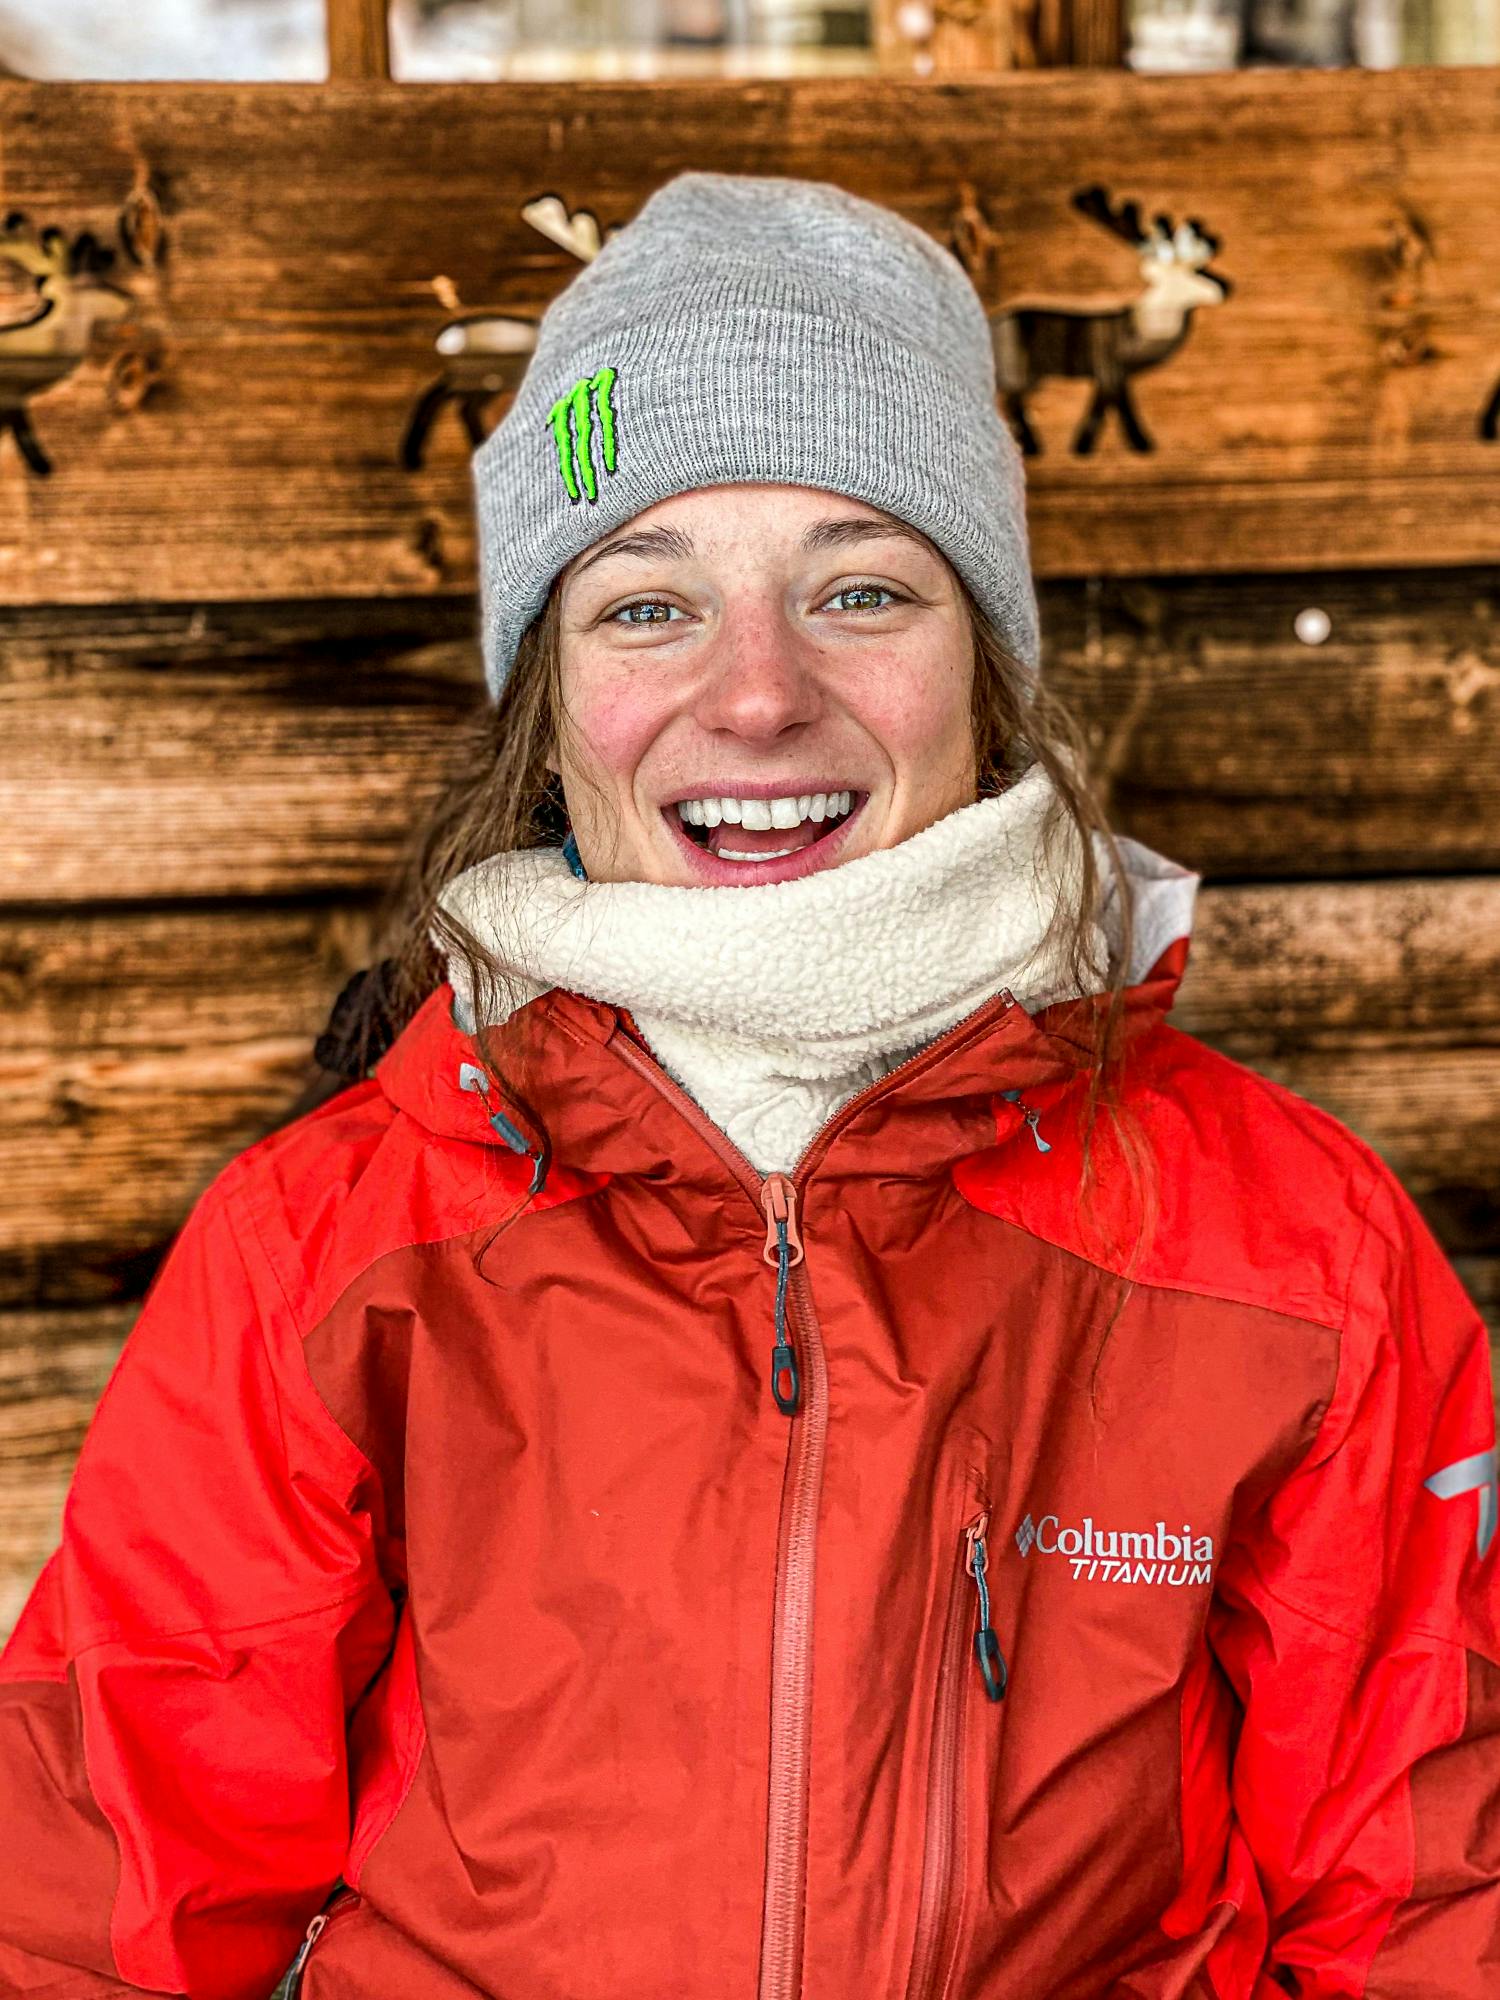 Sarah Hoefflin, Skier of the Year